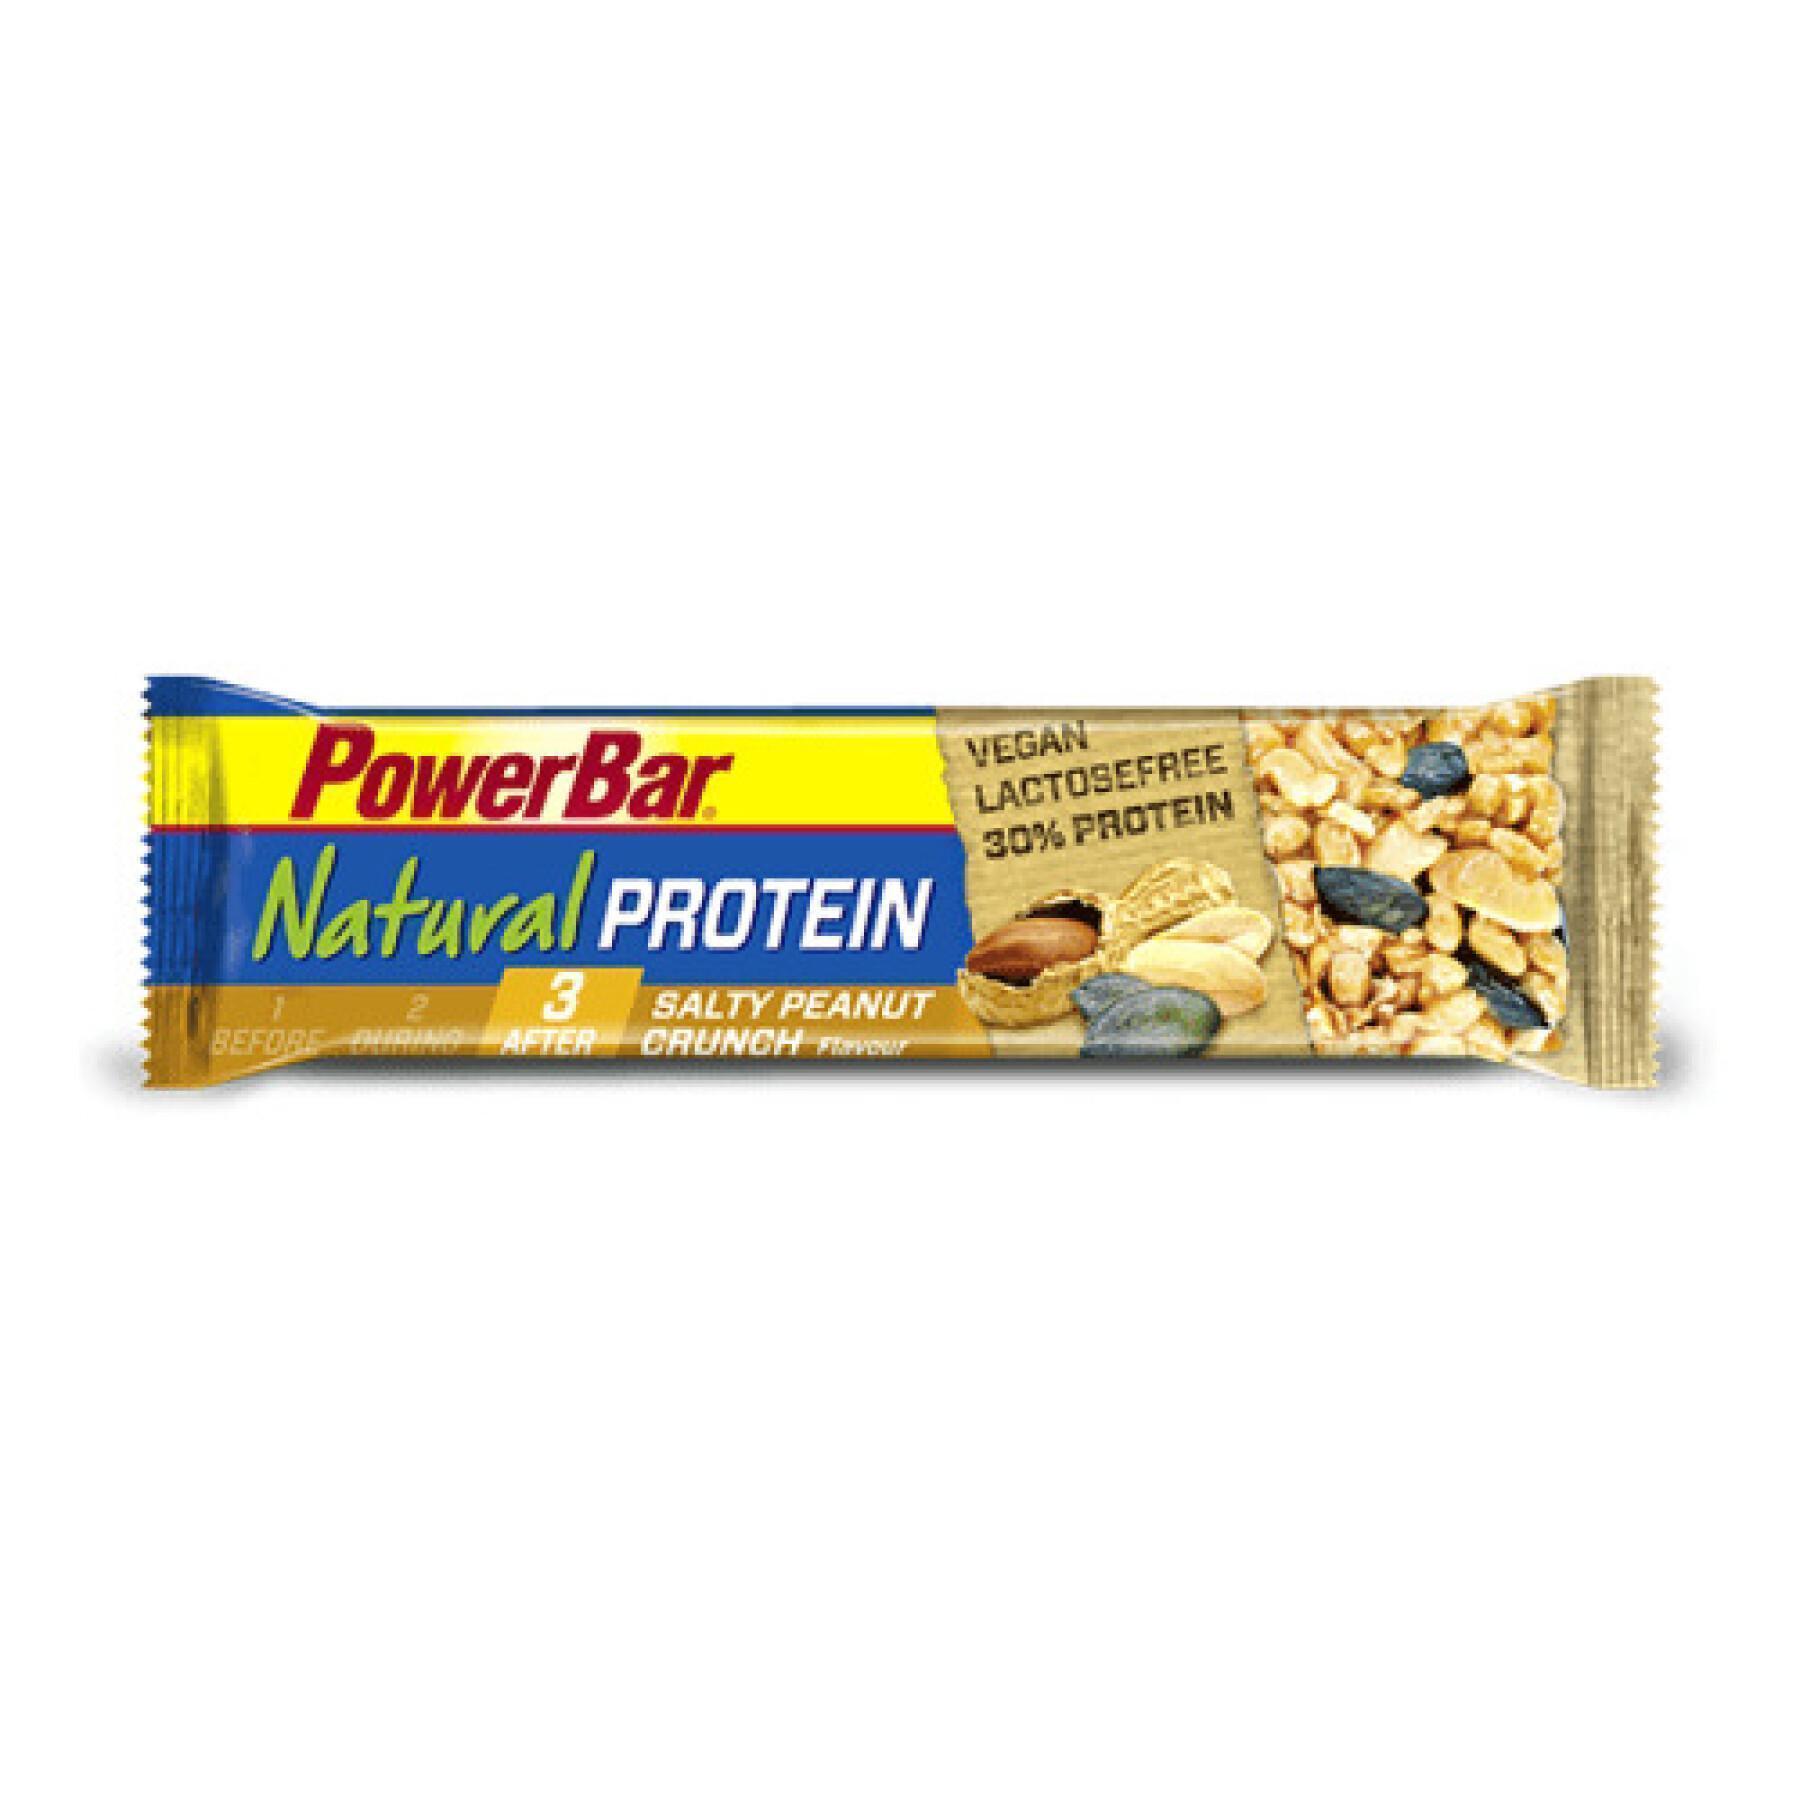 Lotto di 24 barre PowerBar Natural Protein Vegan - Salty Peanut Crunch